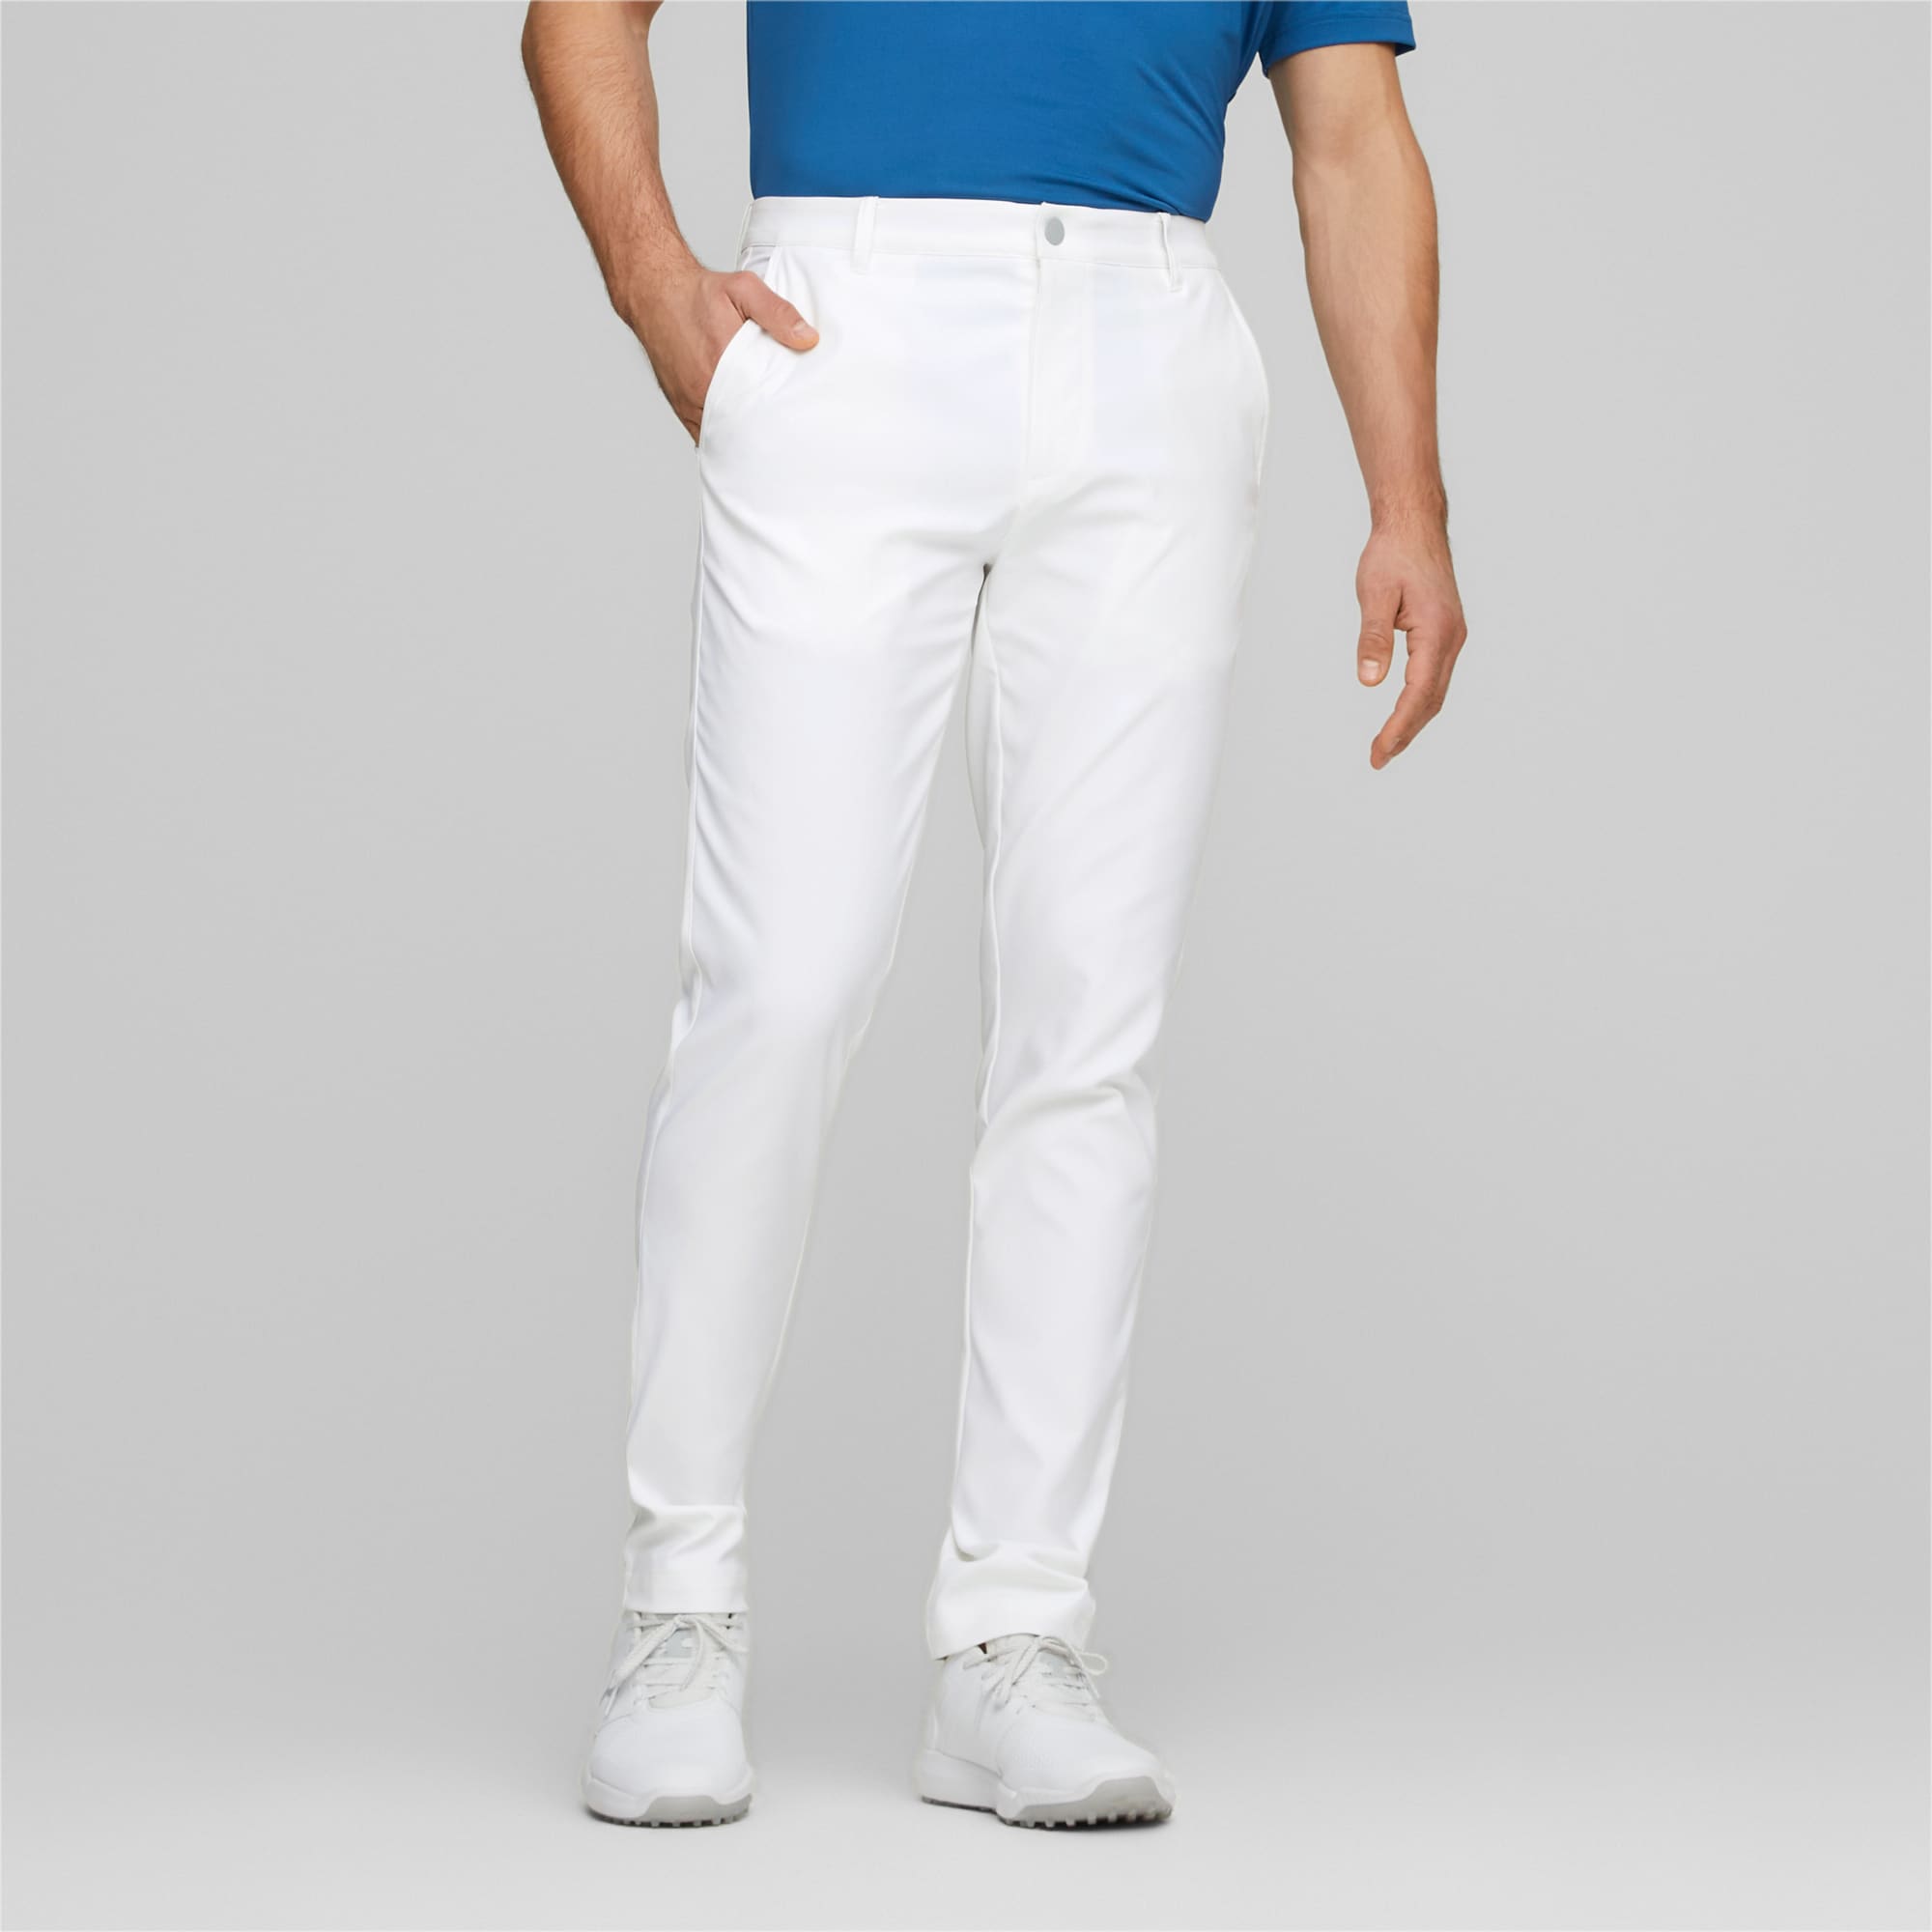 PUMA Dealer Tailored Golf Pants Men, White Glow, Size 32/30, Clothing